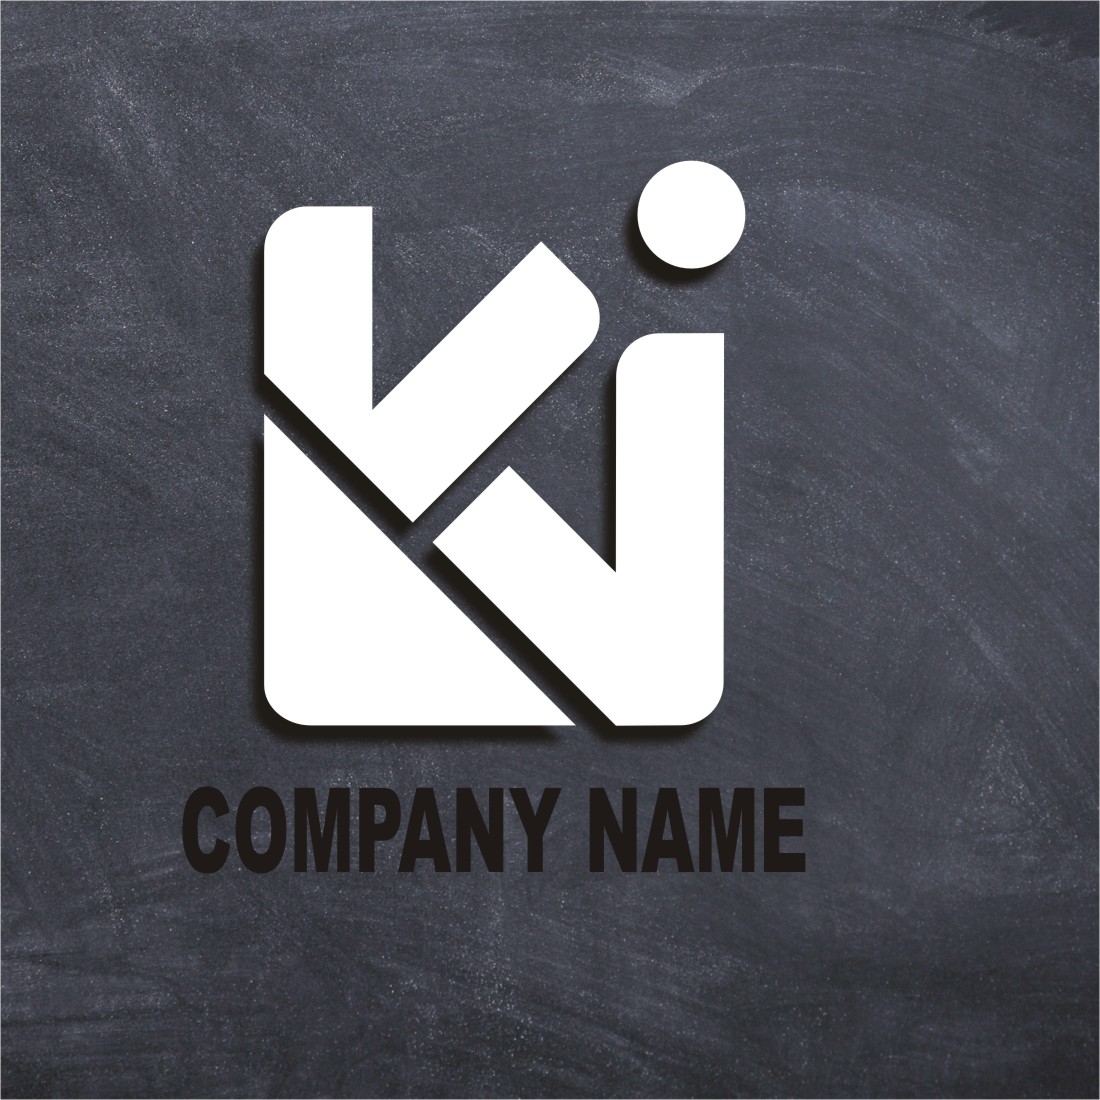 ''K'' monogram logo cover image.